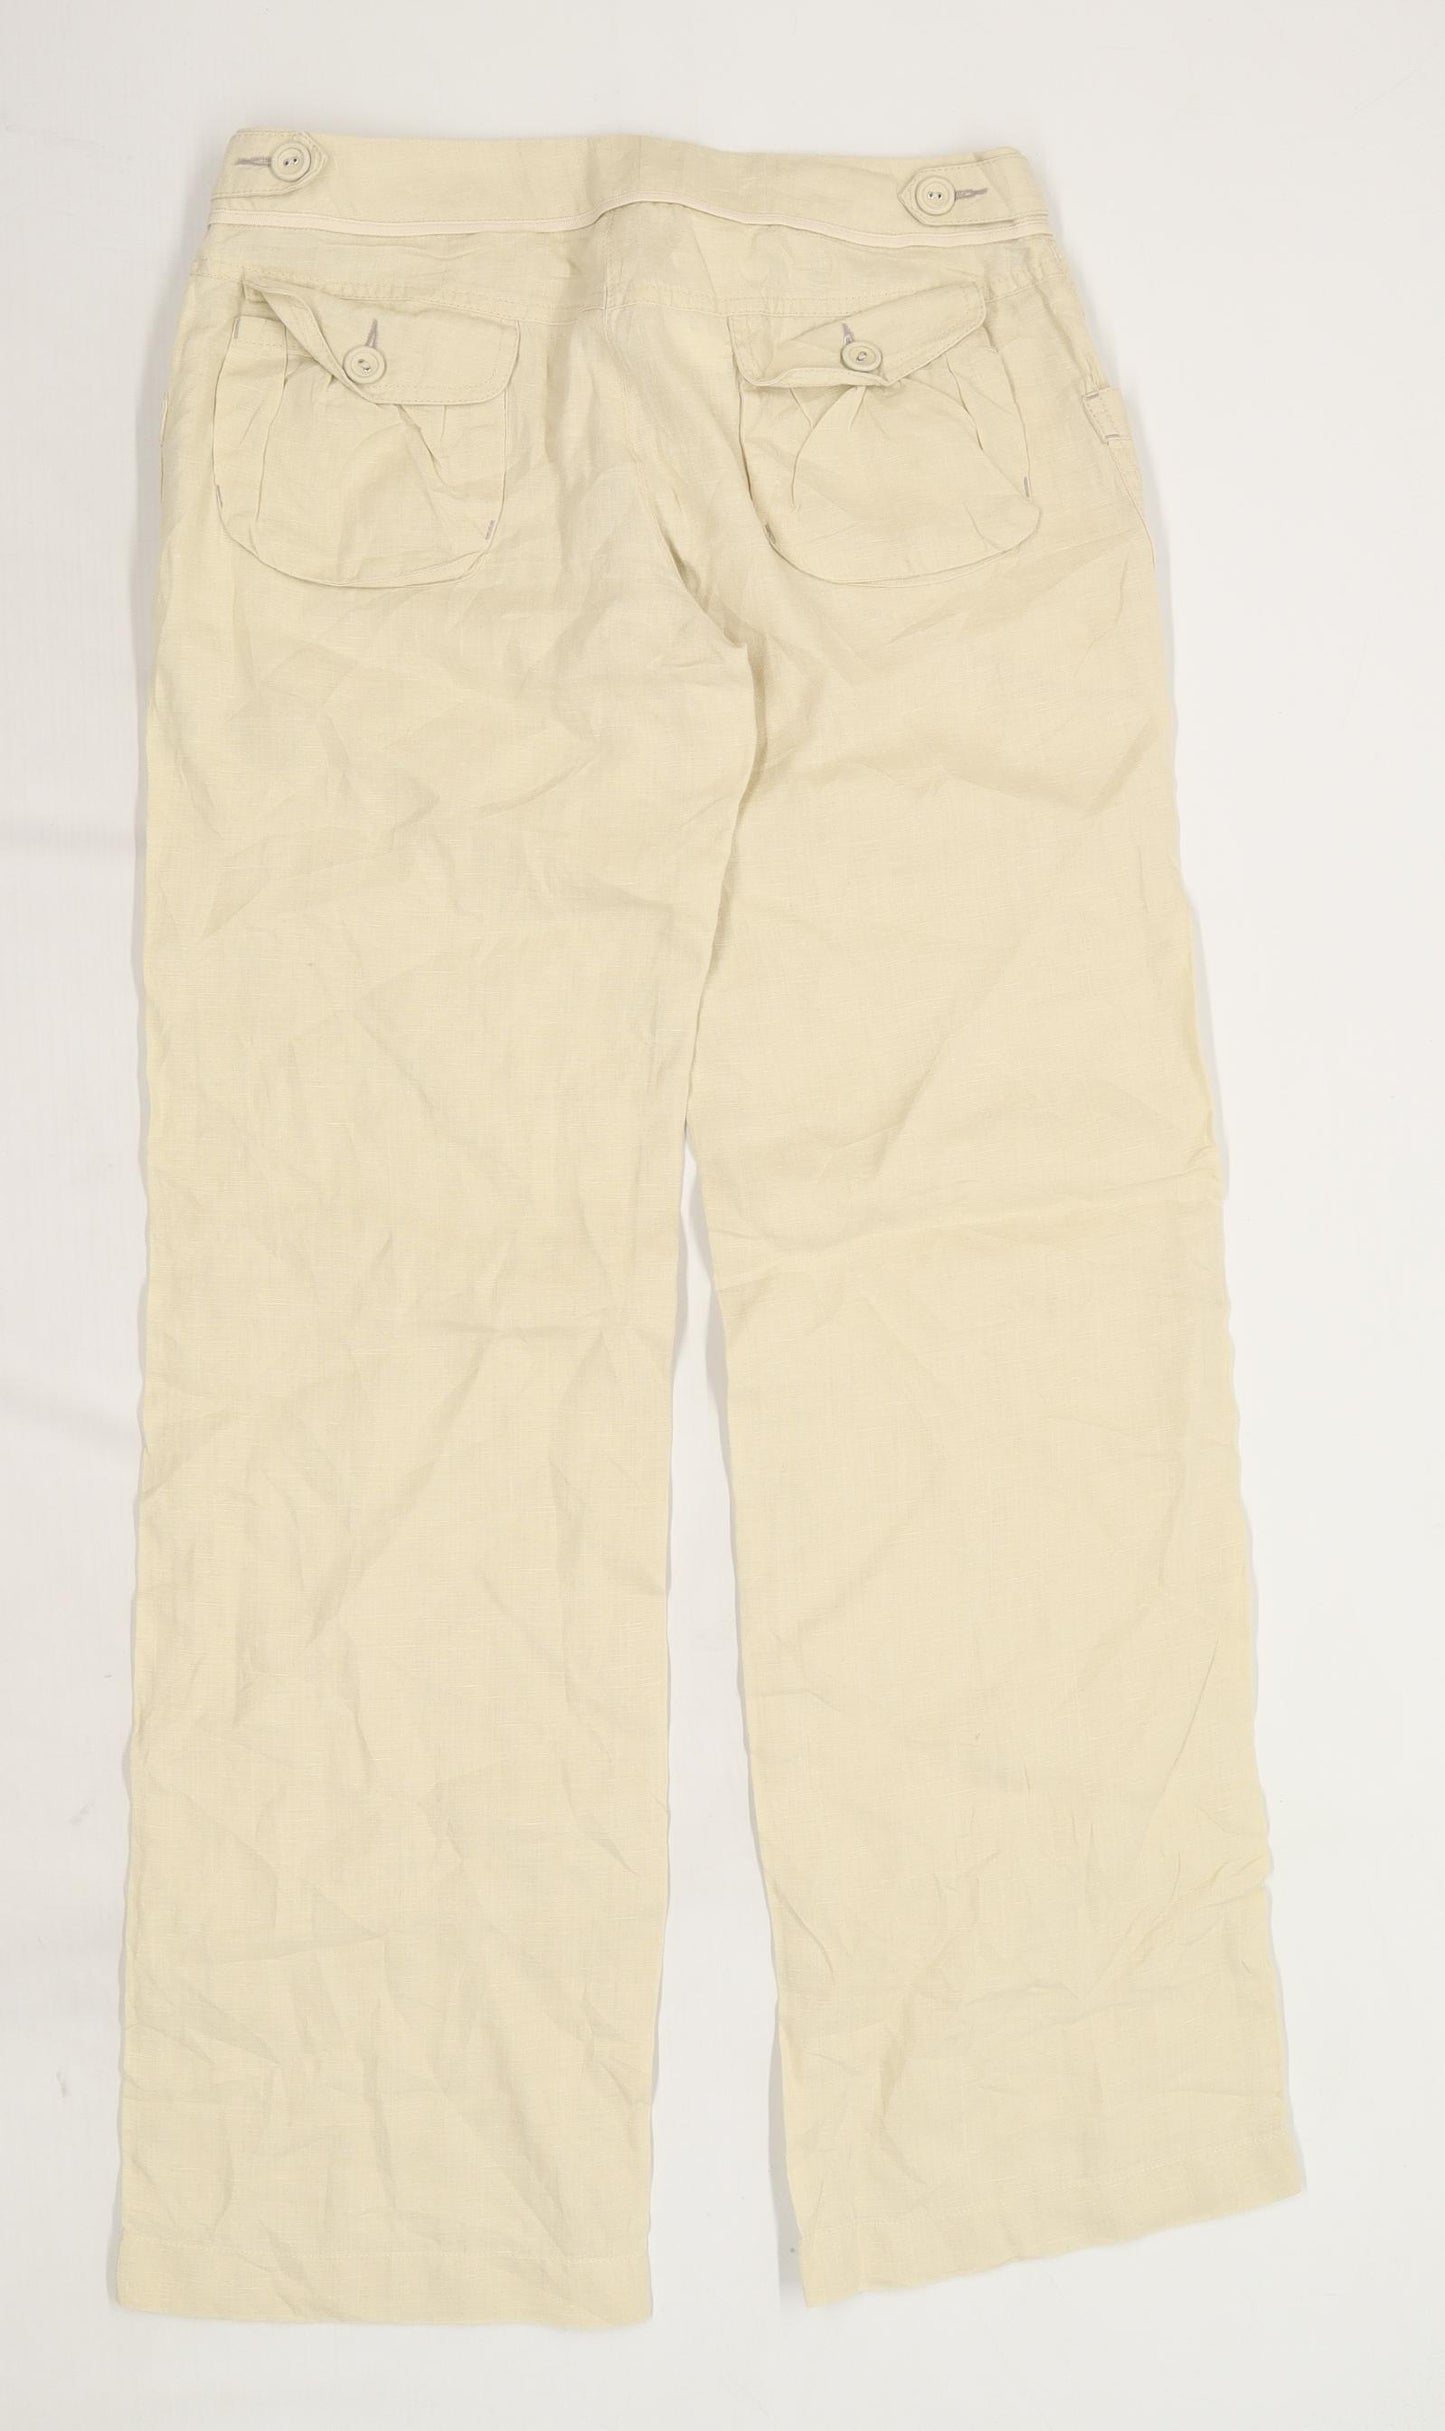 Womens Promod Beige Linen Blend Trousers Size 8/L31